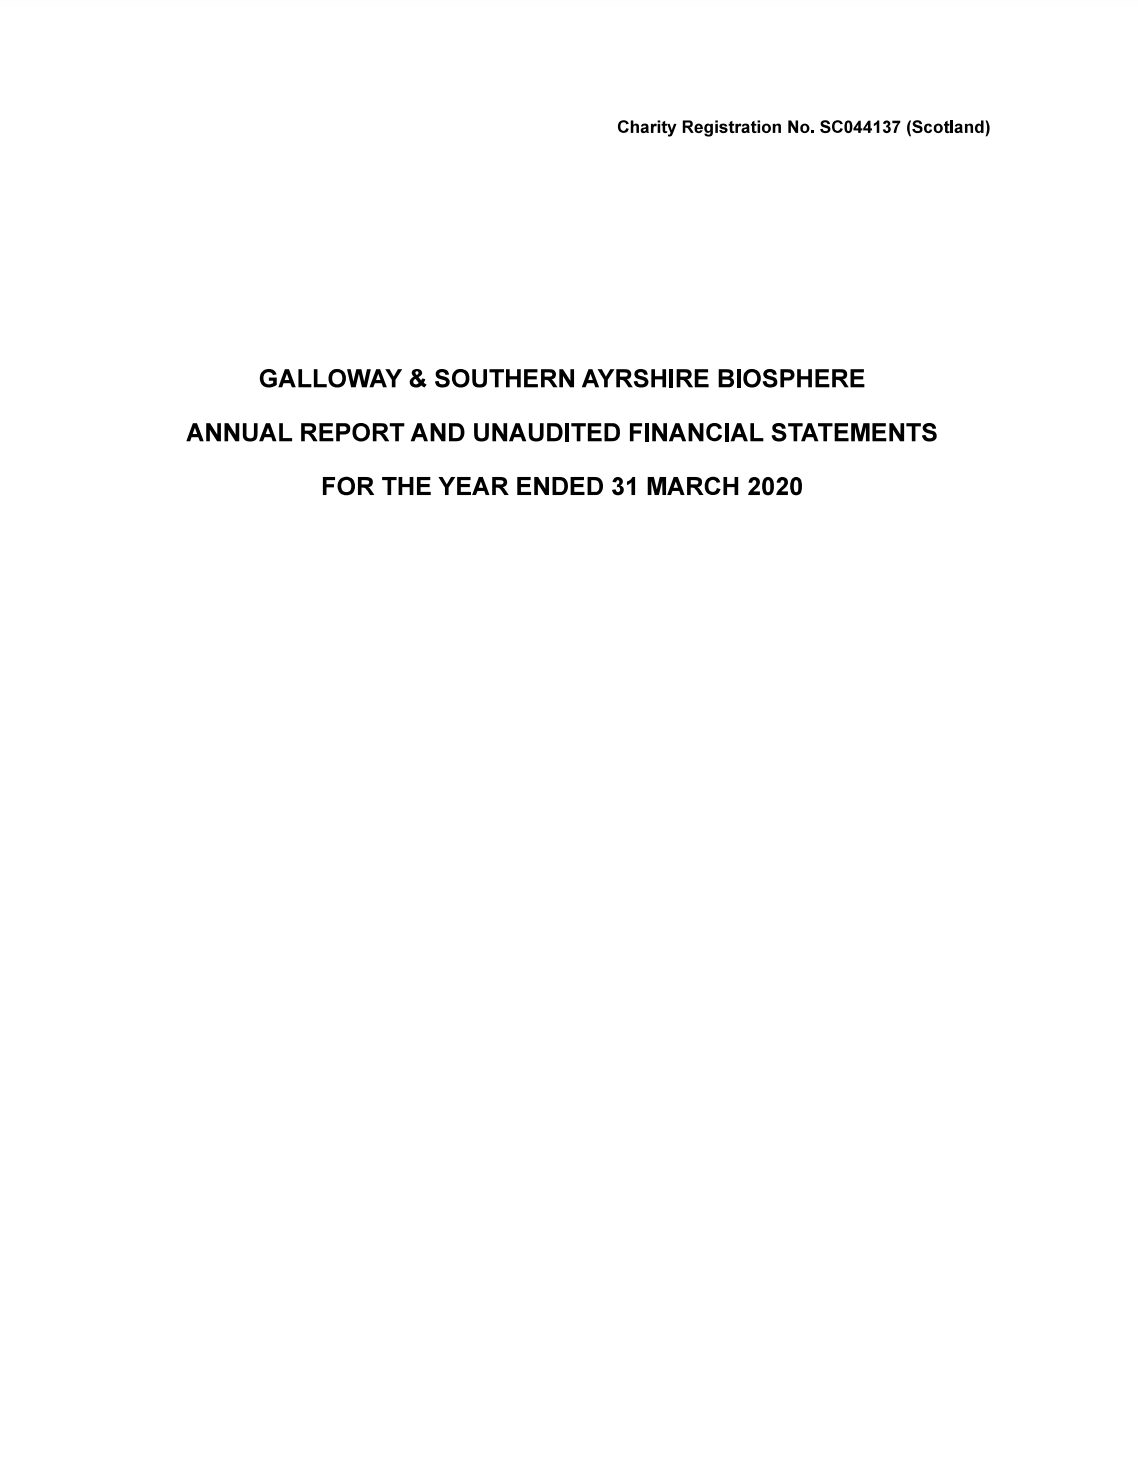 GSAB Accounts 2019-20 - Galloway and Southern Ayrshire Biosphere